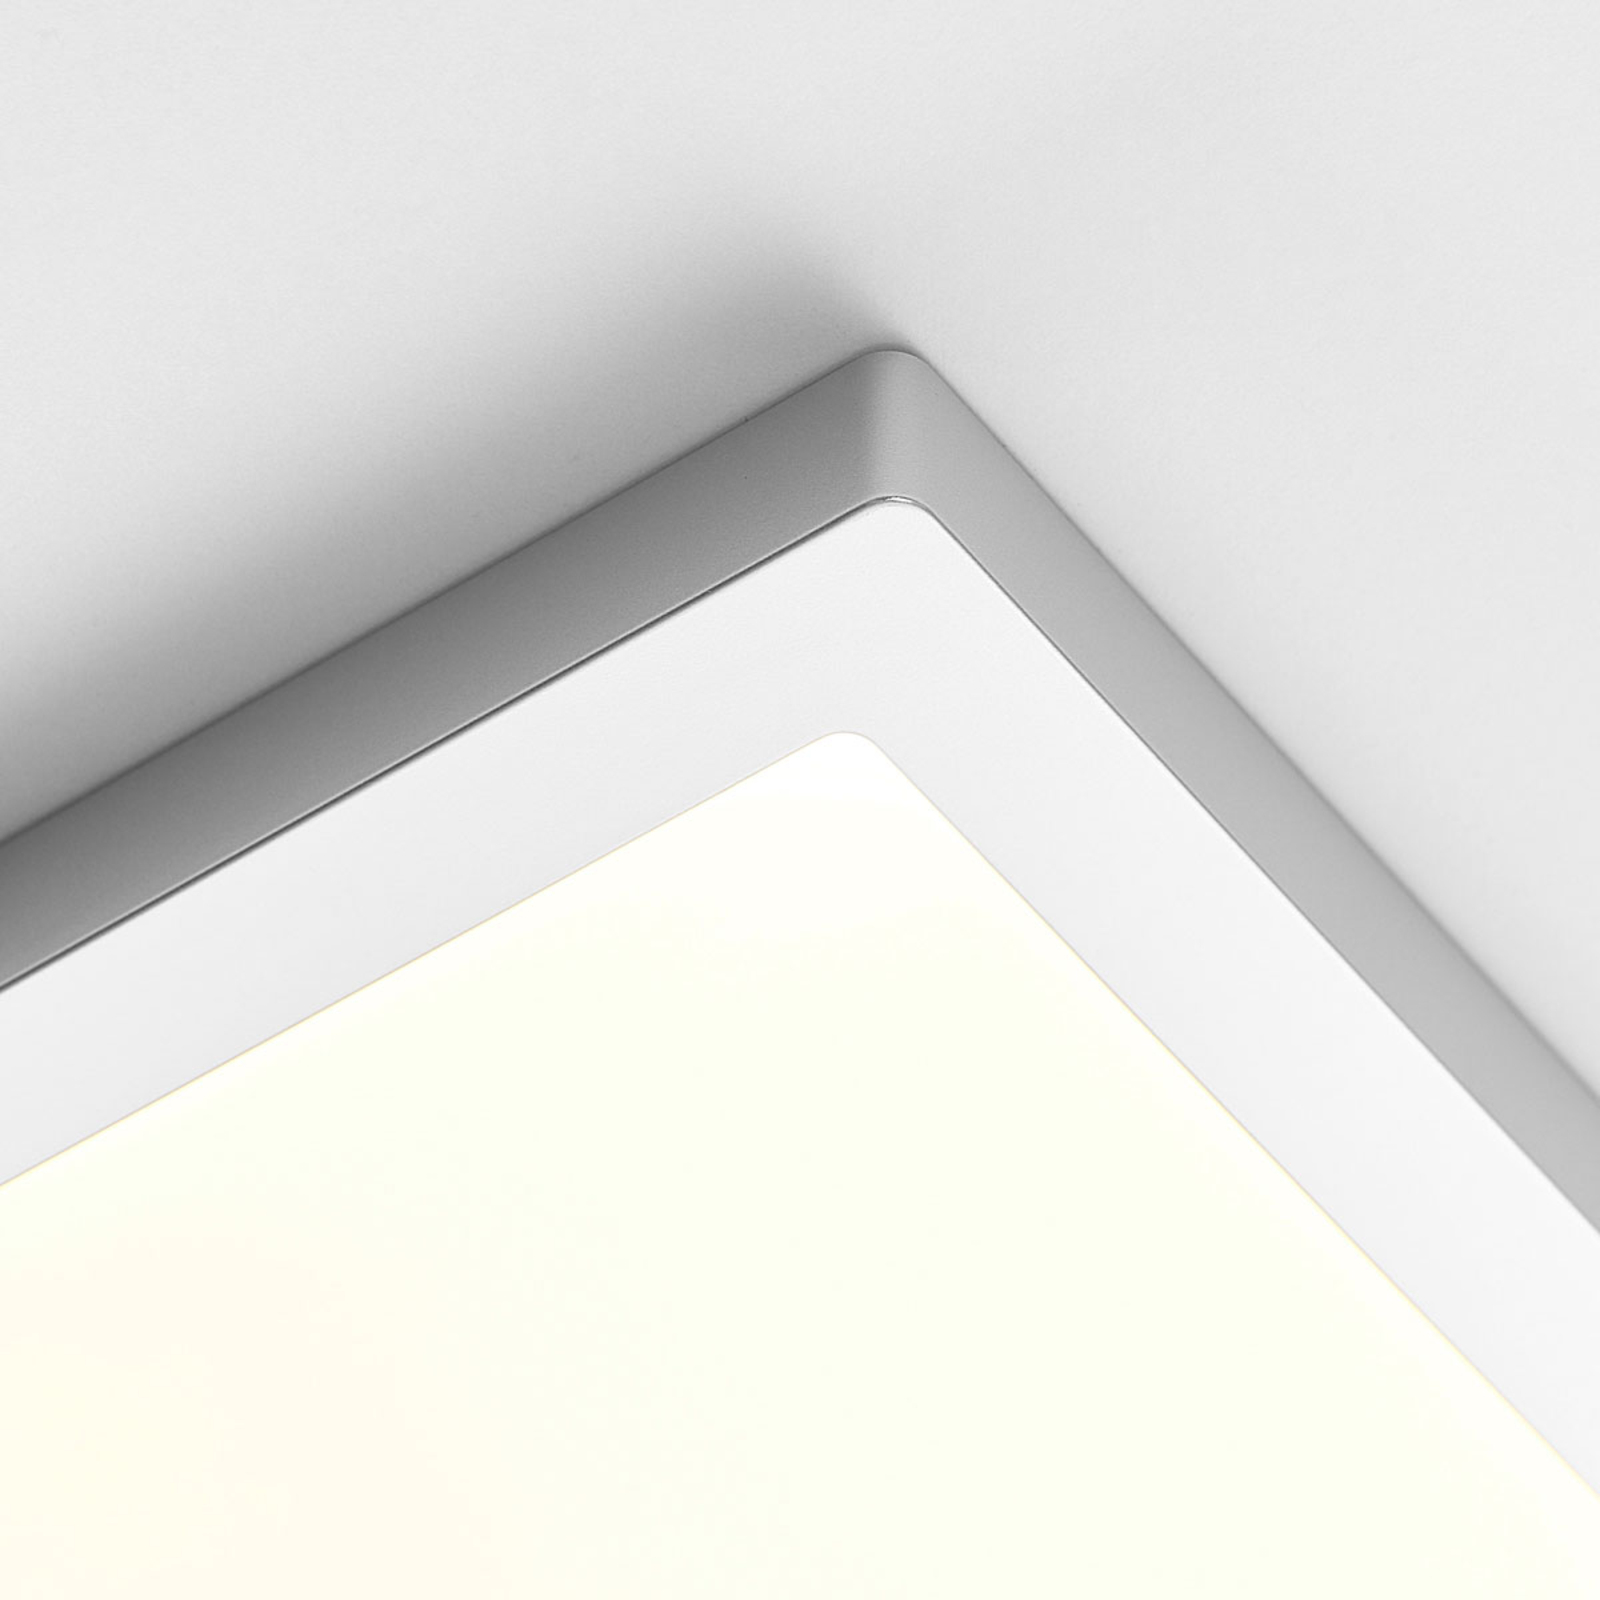 Lampa sufitowa LED Solvie, srebrna, kątowa, 30 x 30 cm